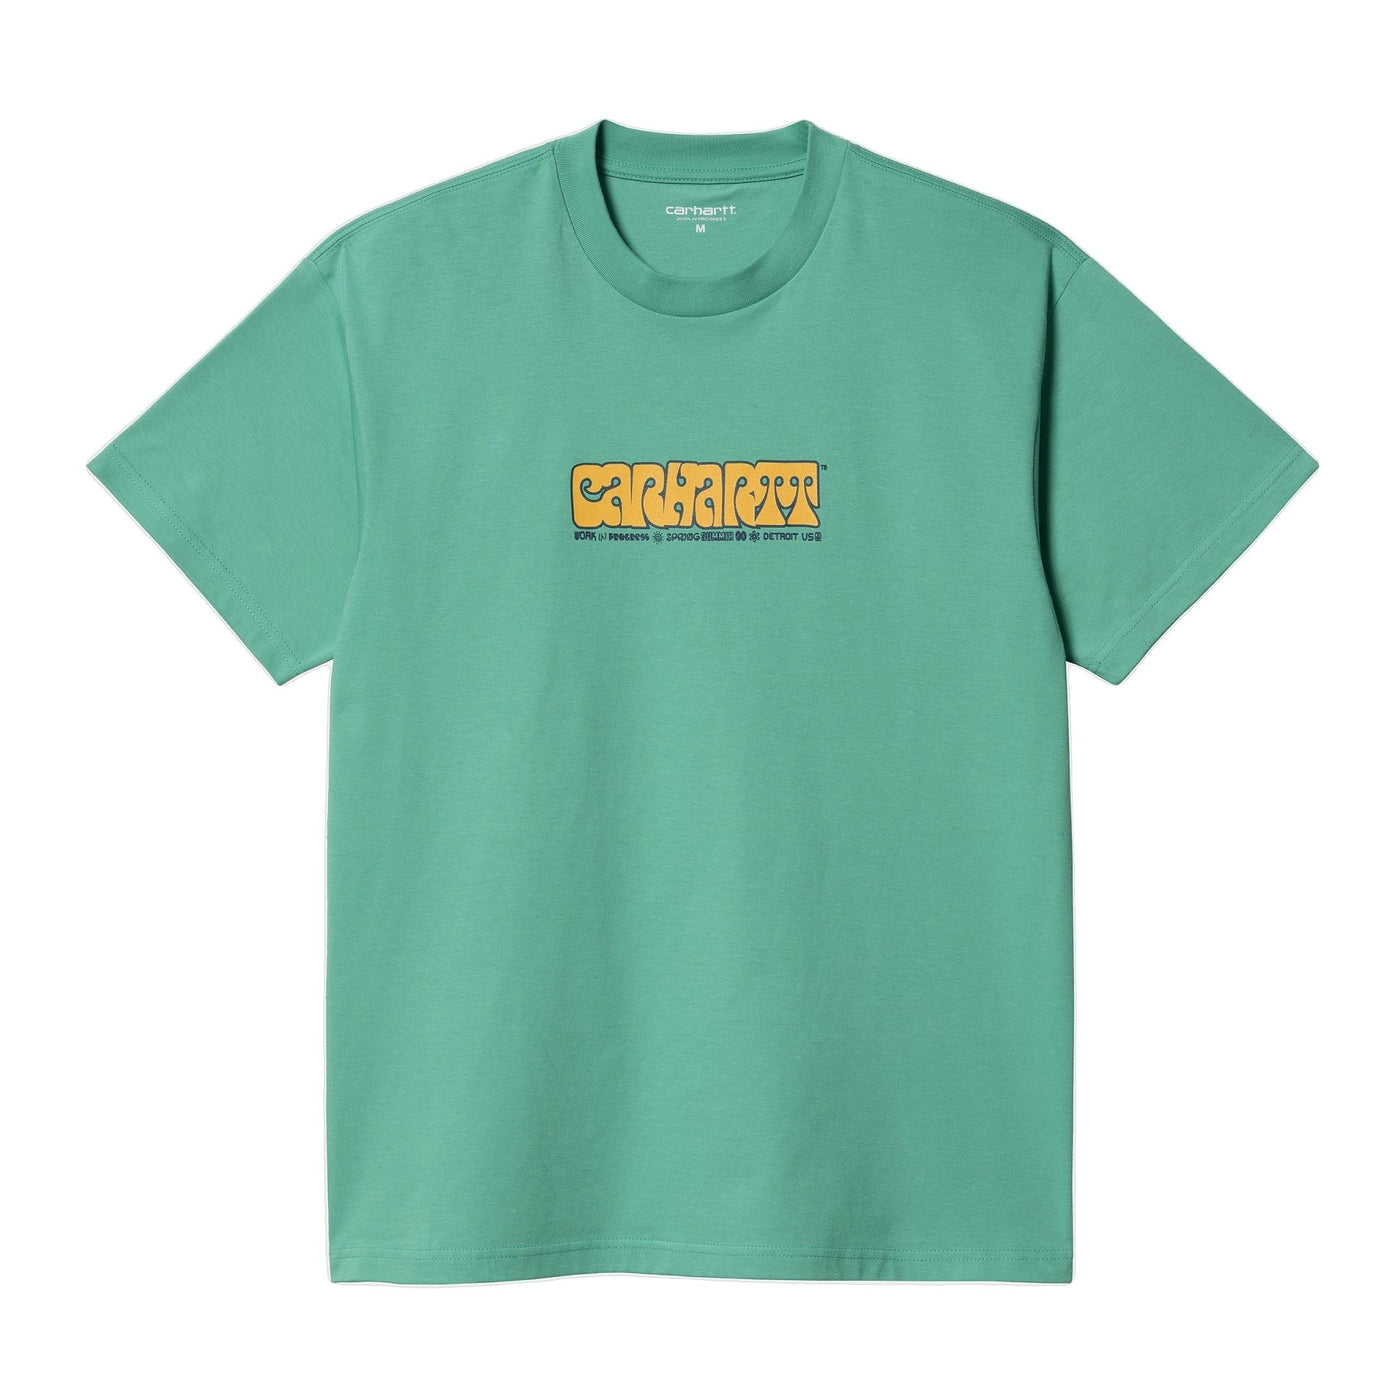 Carhartt WIP - S/S Heat Script T-Shirt - Lothaire